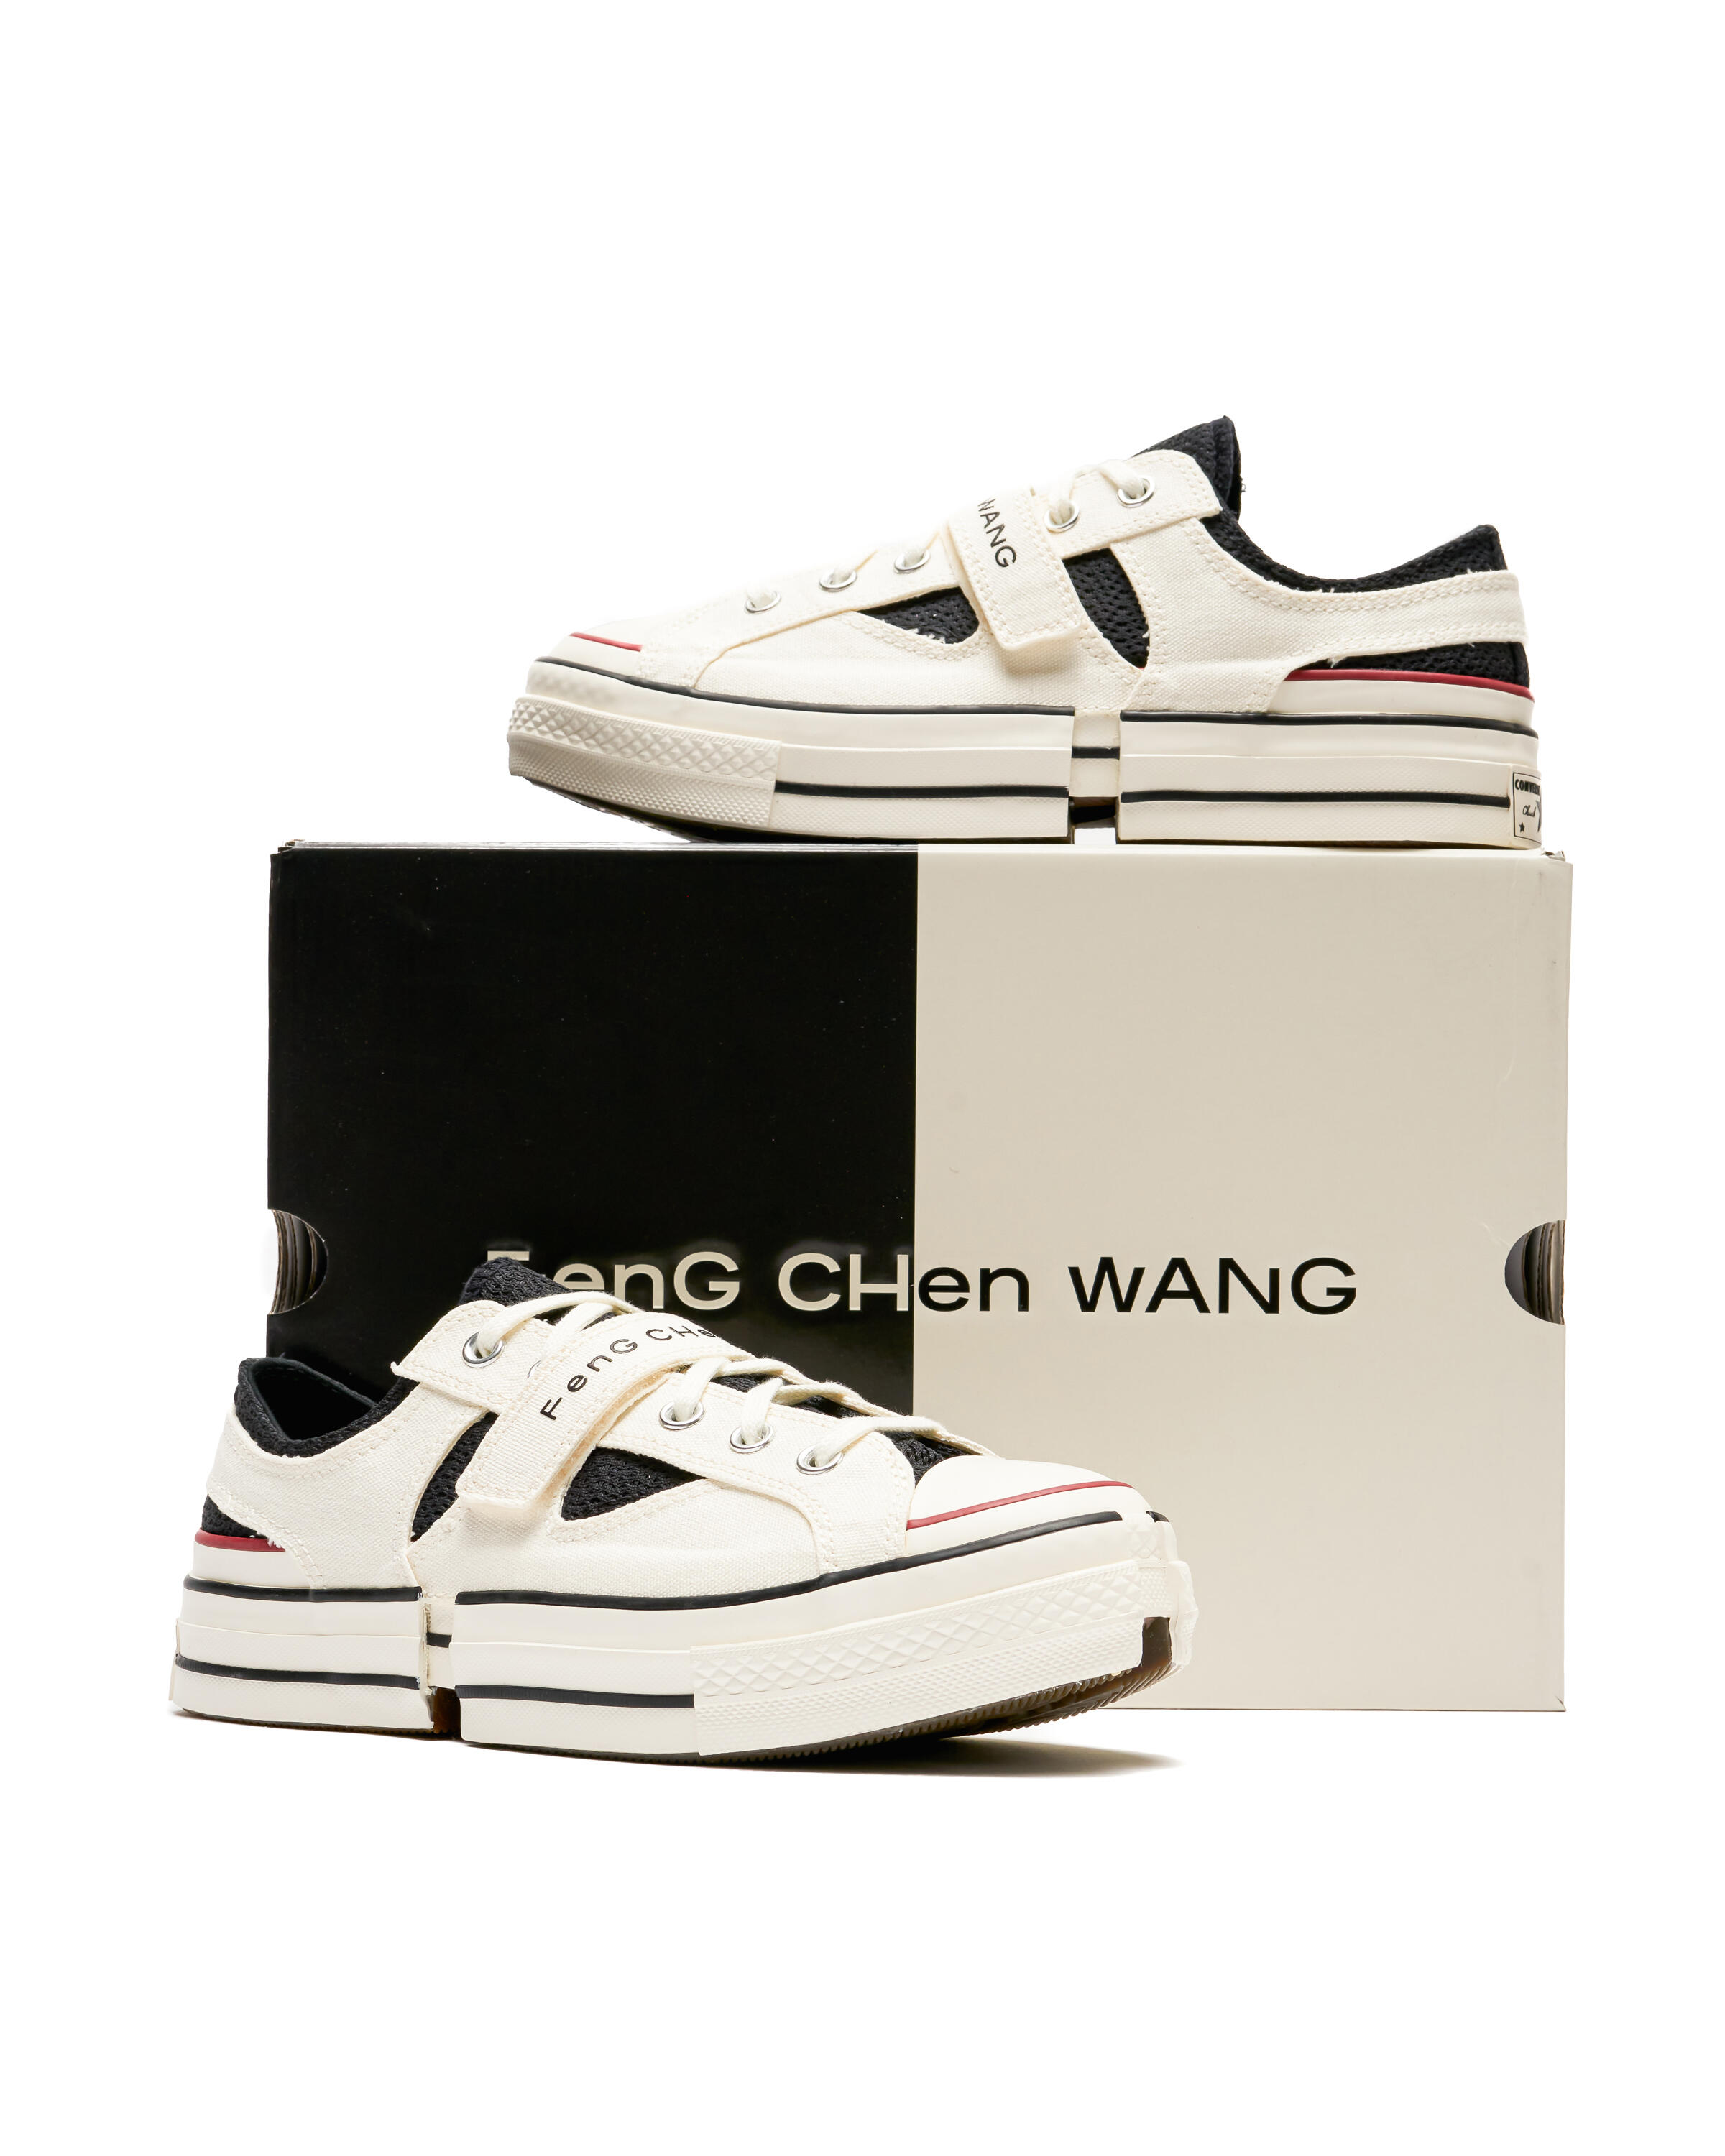 CONVERSE x Feng Chen Wang Chuck 70 2-in-1 | A08857C | AFEW STORE